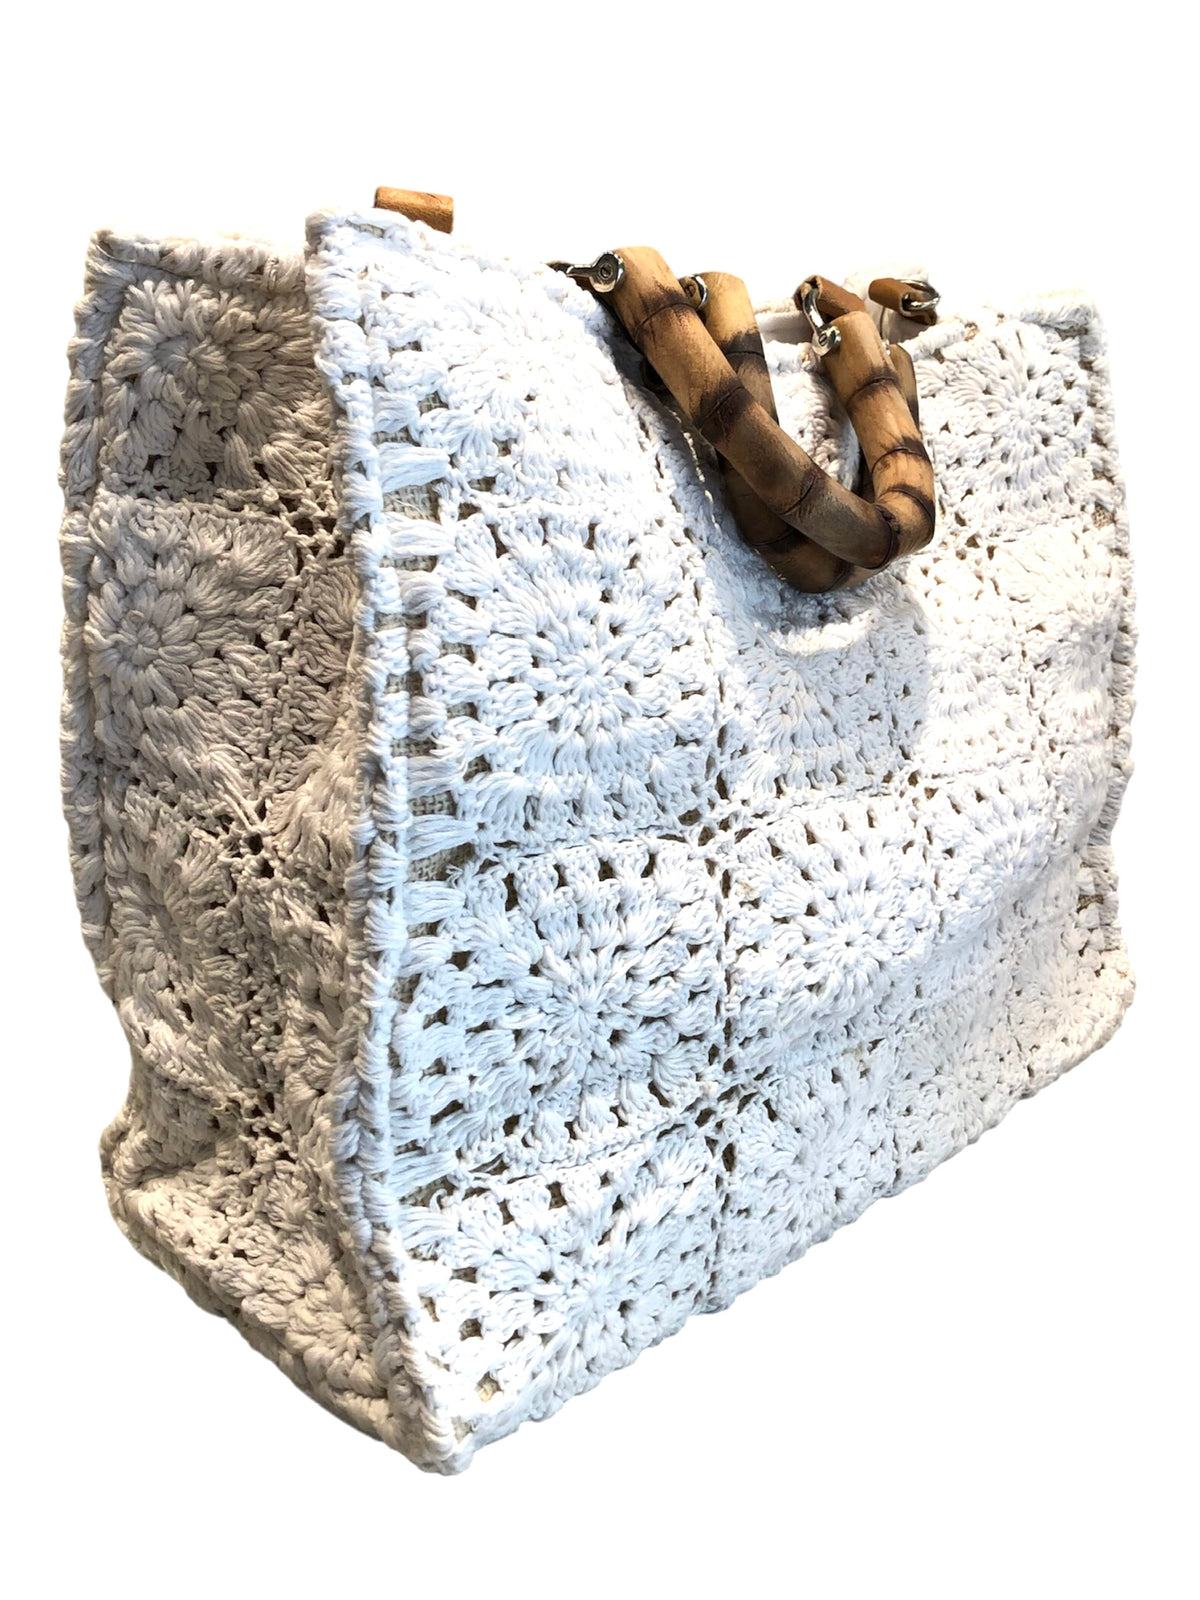 Large Crocheted Bag